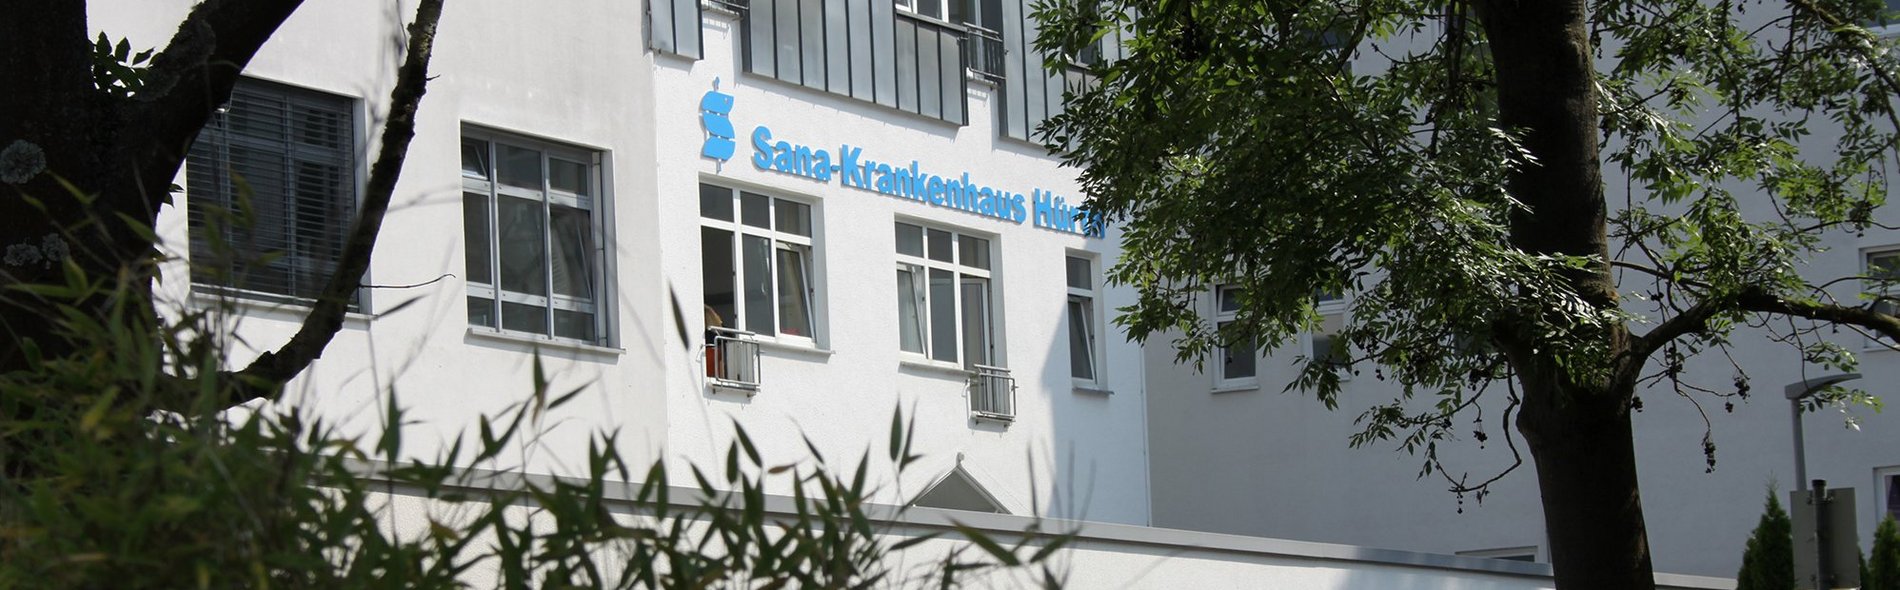 Haupteingang des Sana-Krankenhauses Hürth (Foto: Stefan Mülders)